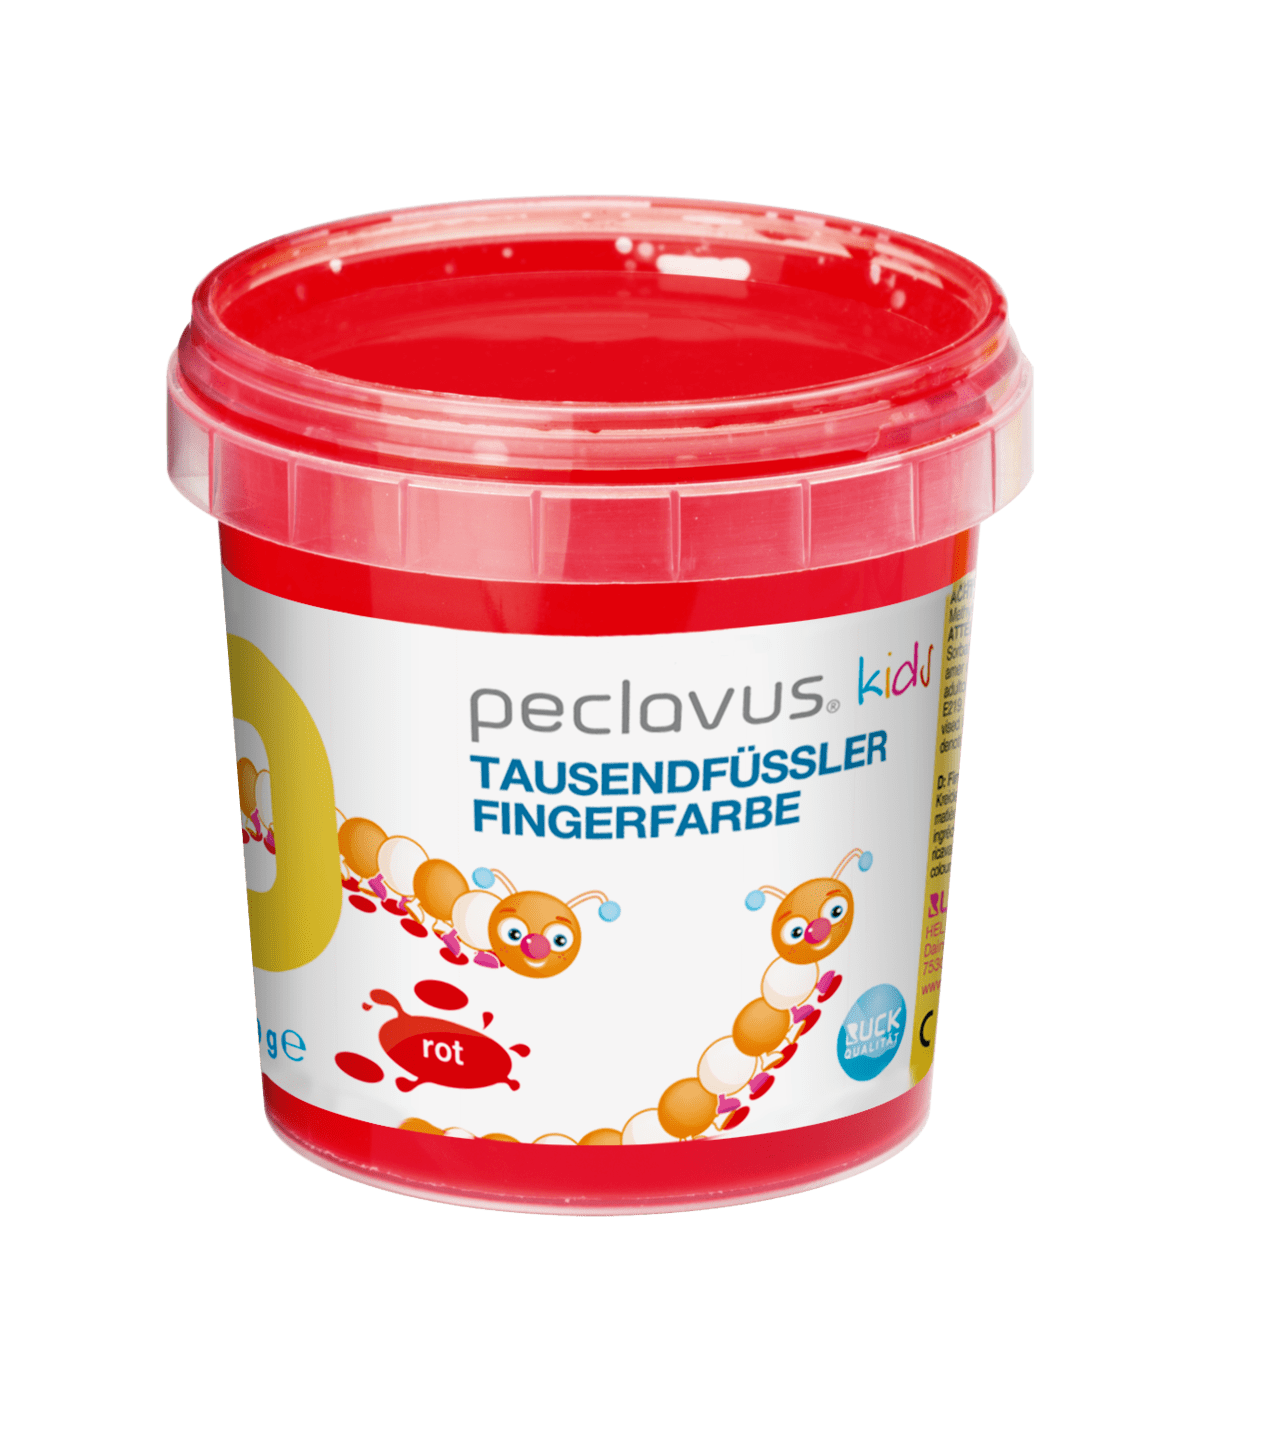 peclavus - Fingerfarbe, 150 g in rot